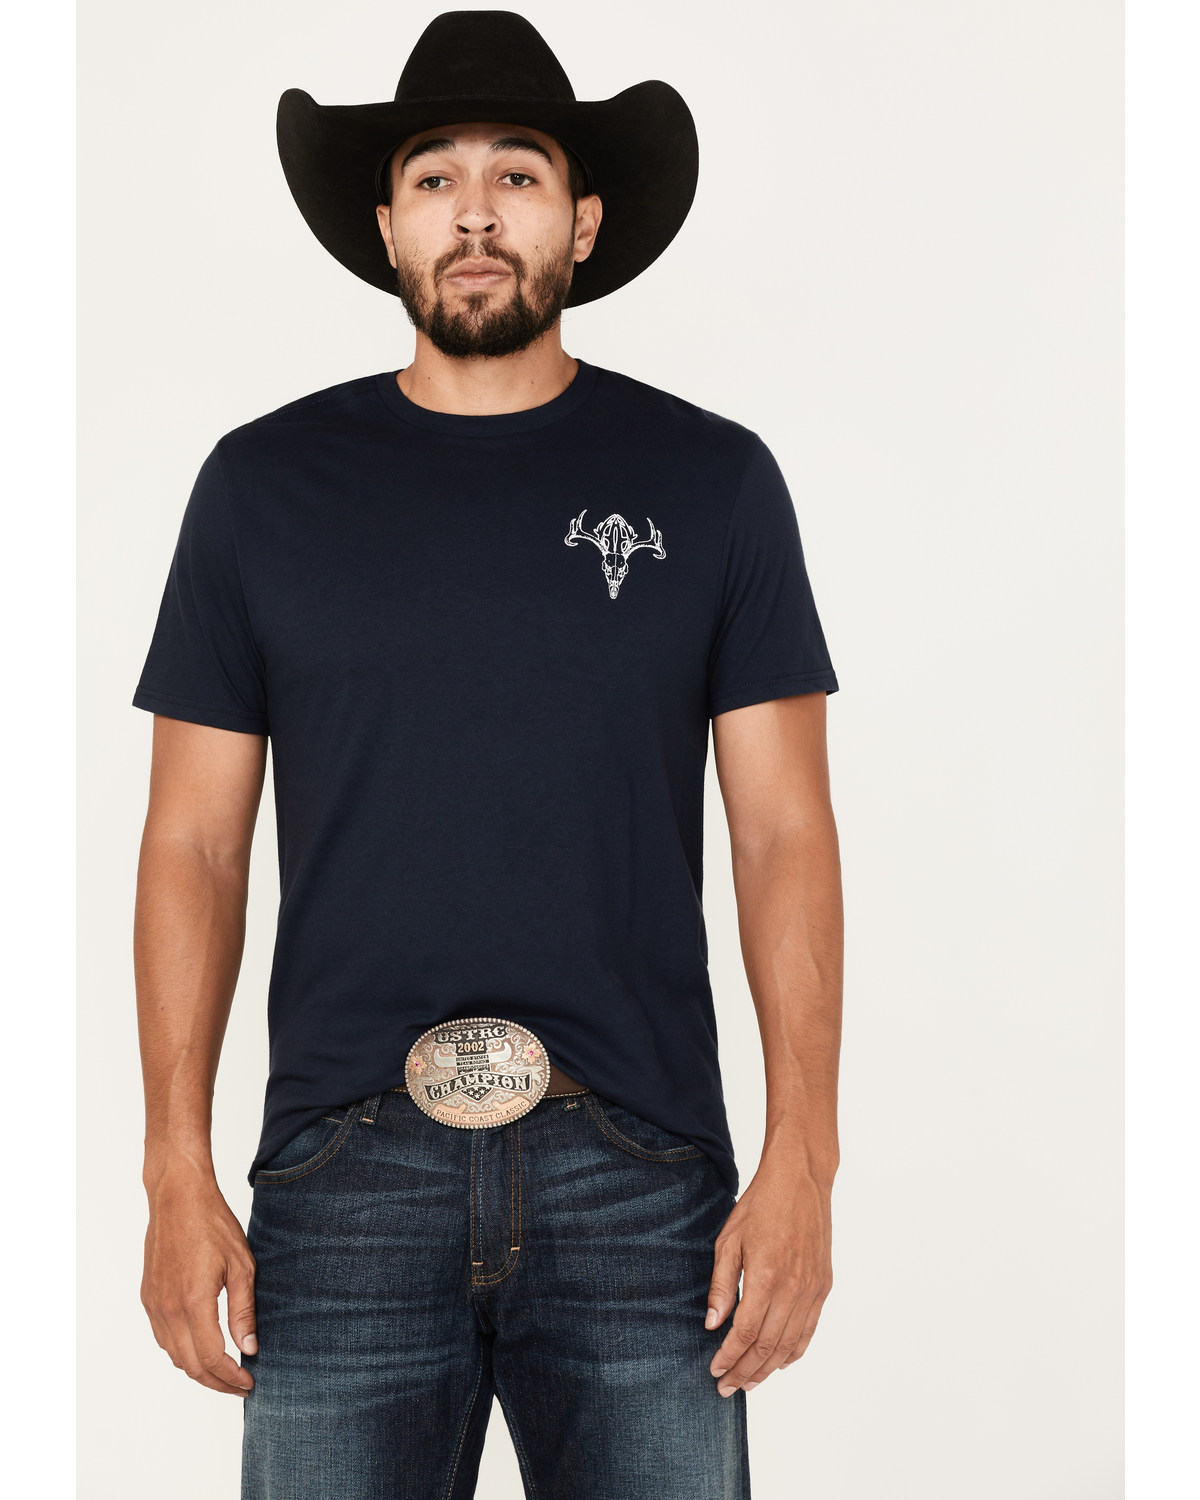 Cowboy Hardware Men's Hunters Steerhead Skull Flag Graphic T-Shirt